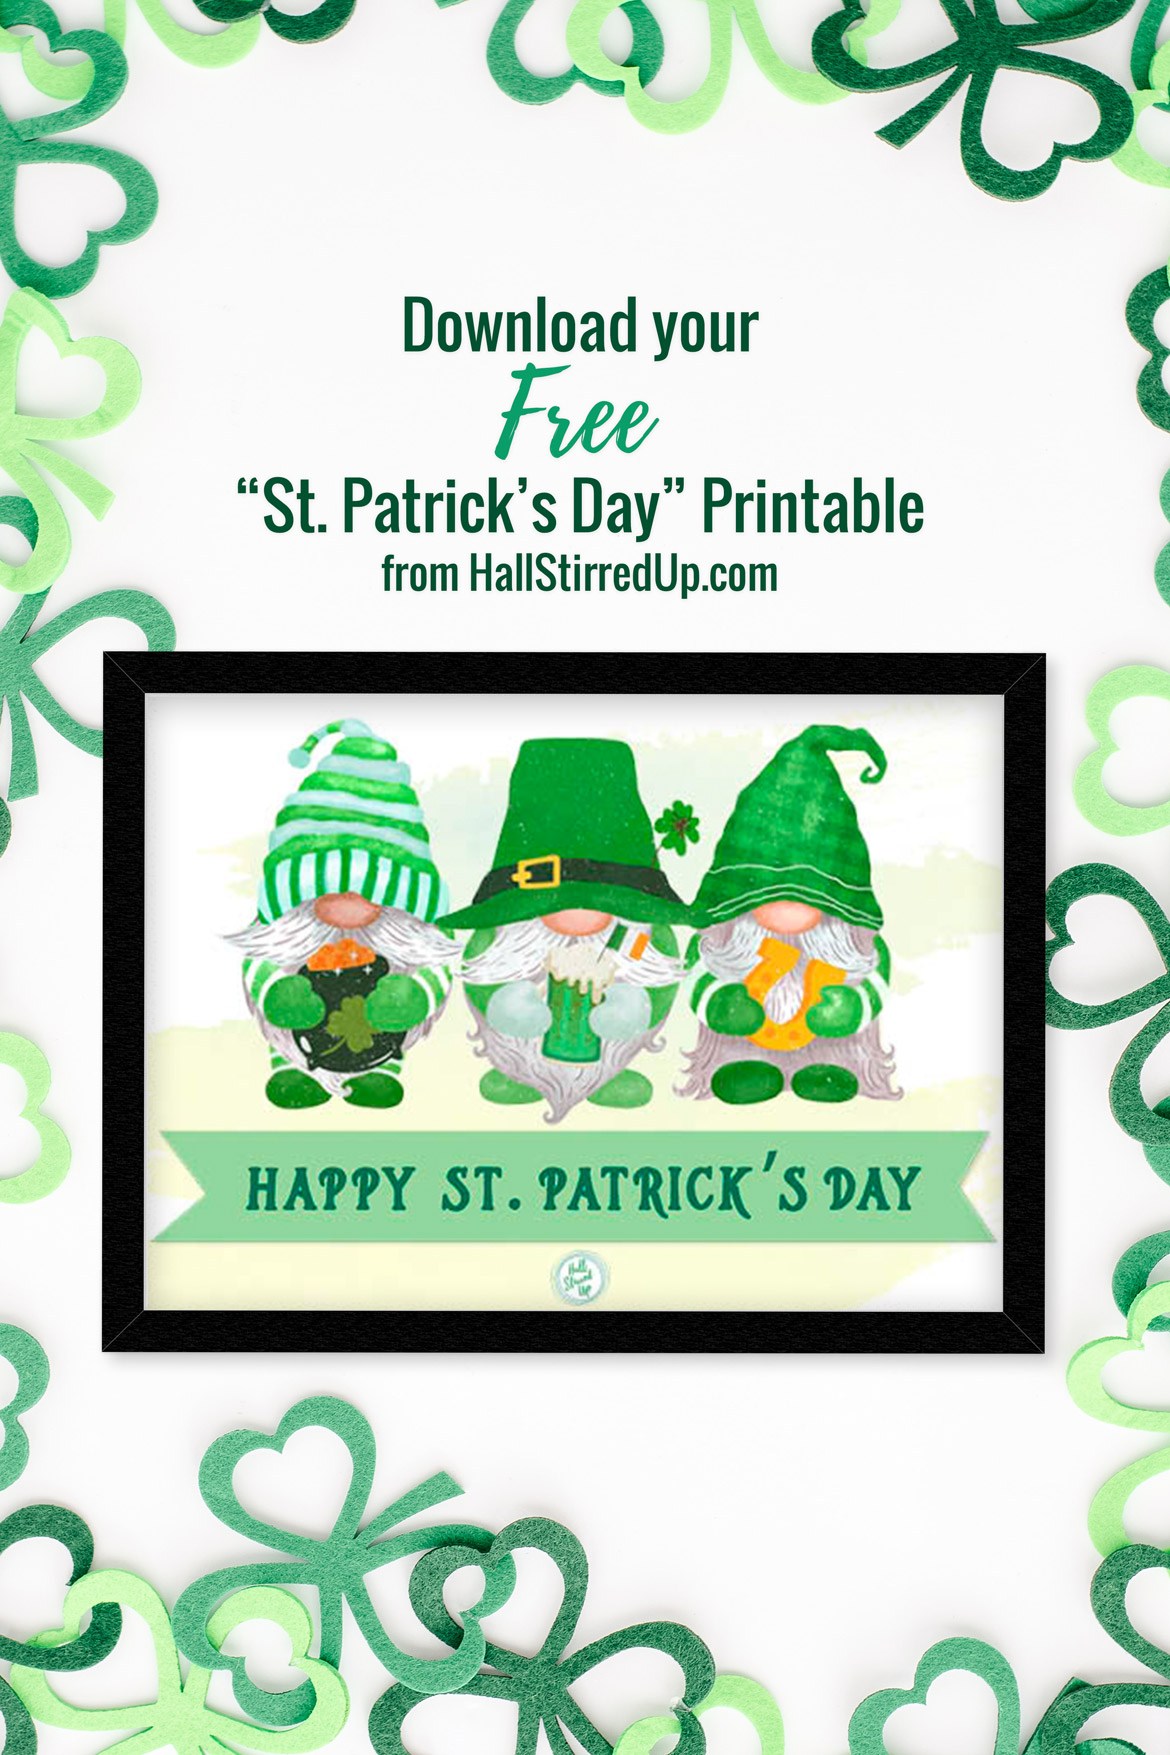 It's a festive St. Patrick's Day free printable